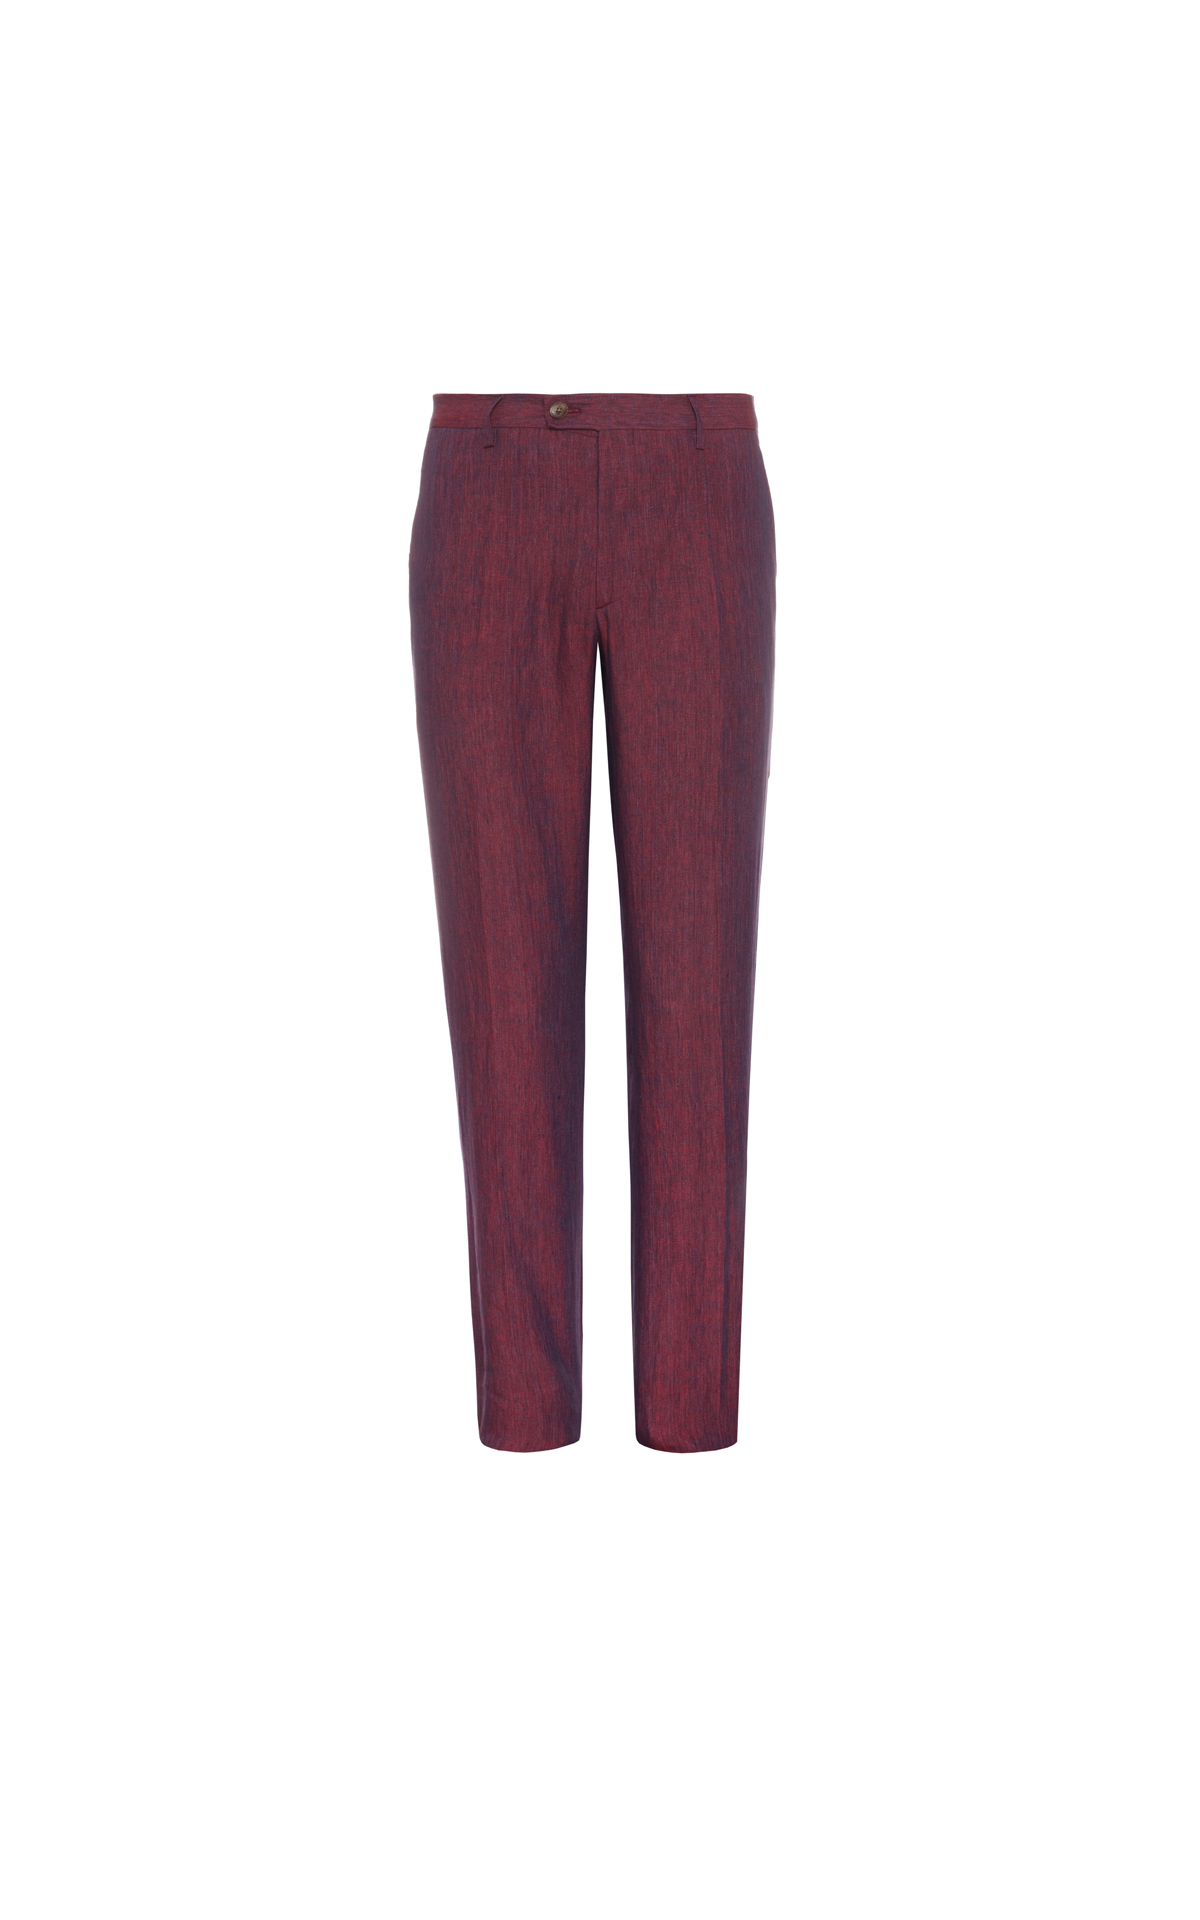 Etro  Men's burgundy linen trousers from Bicester Village